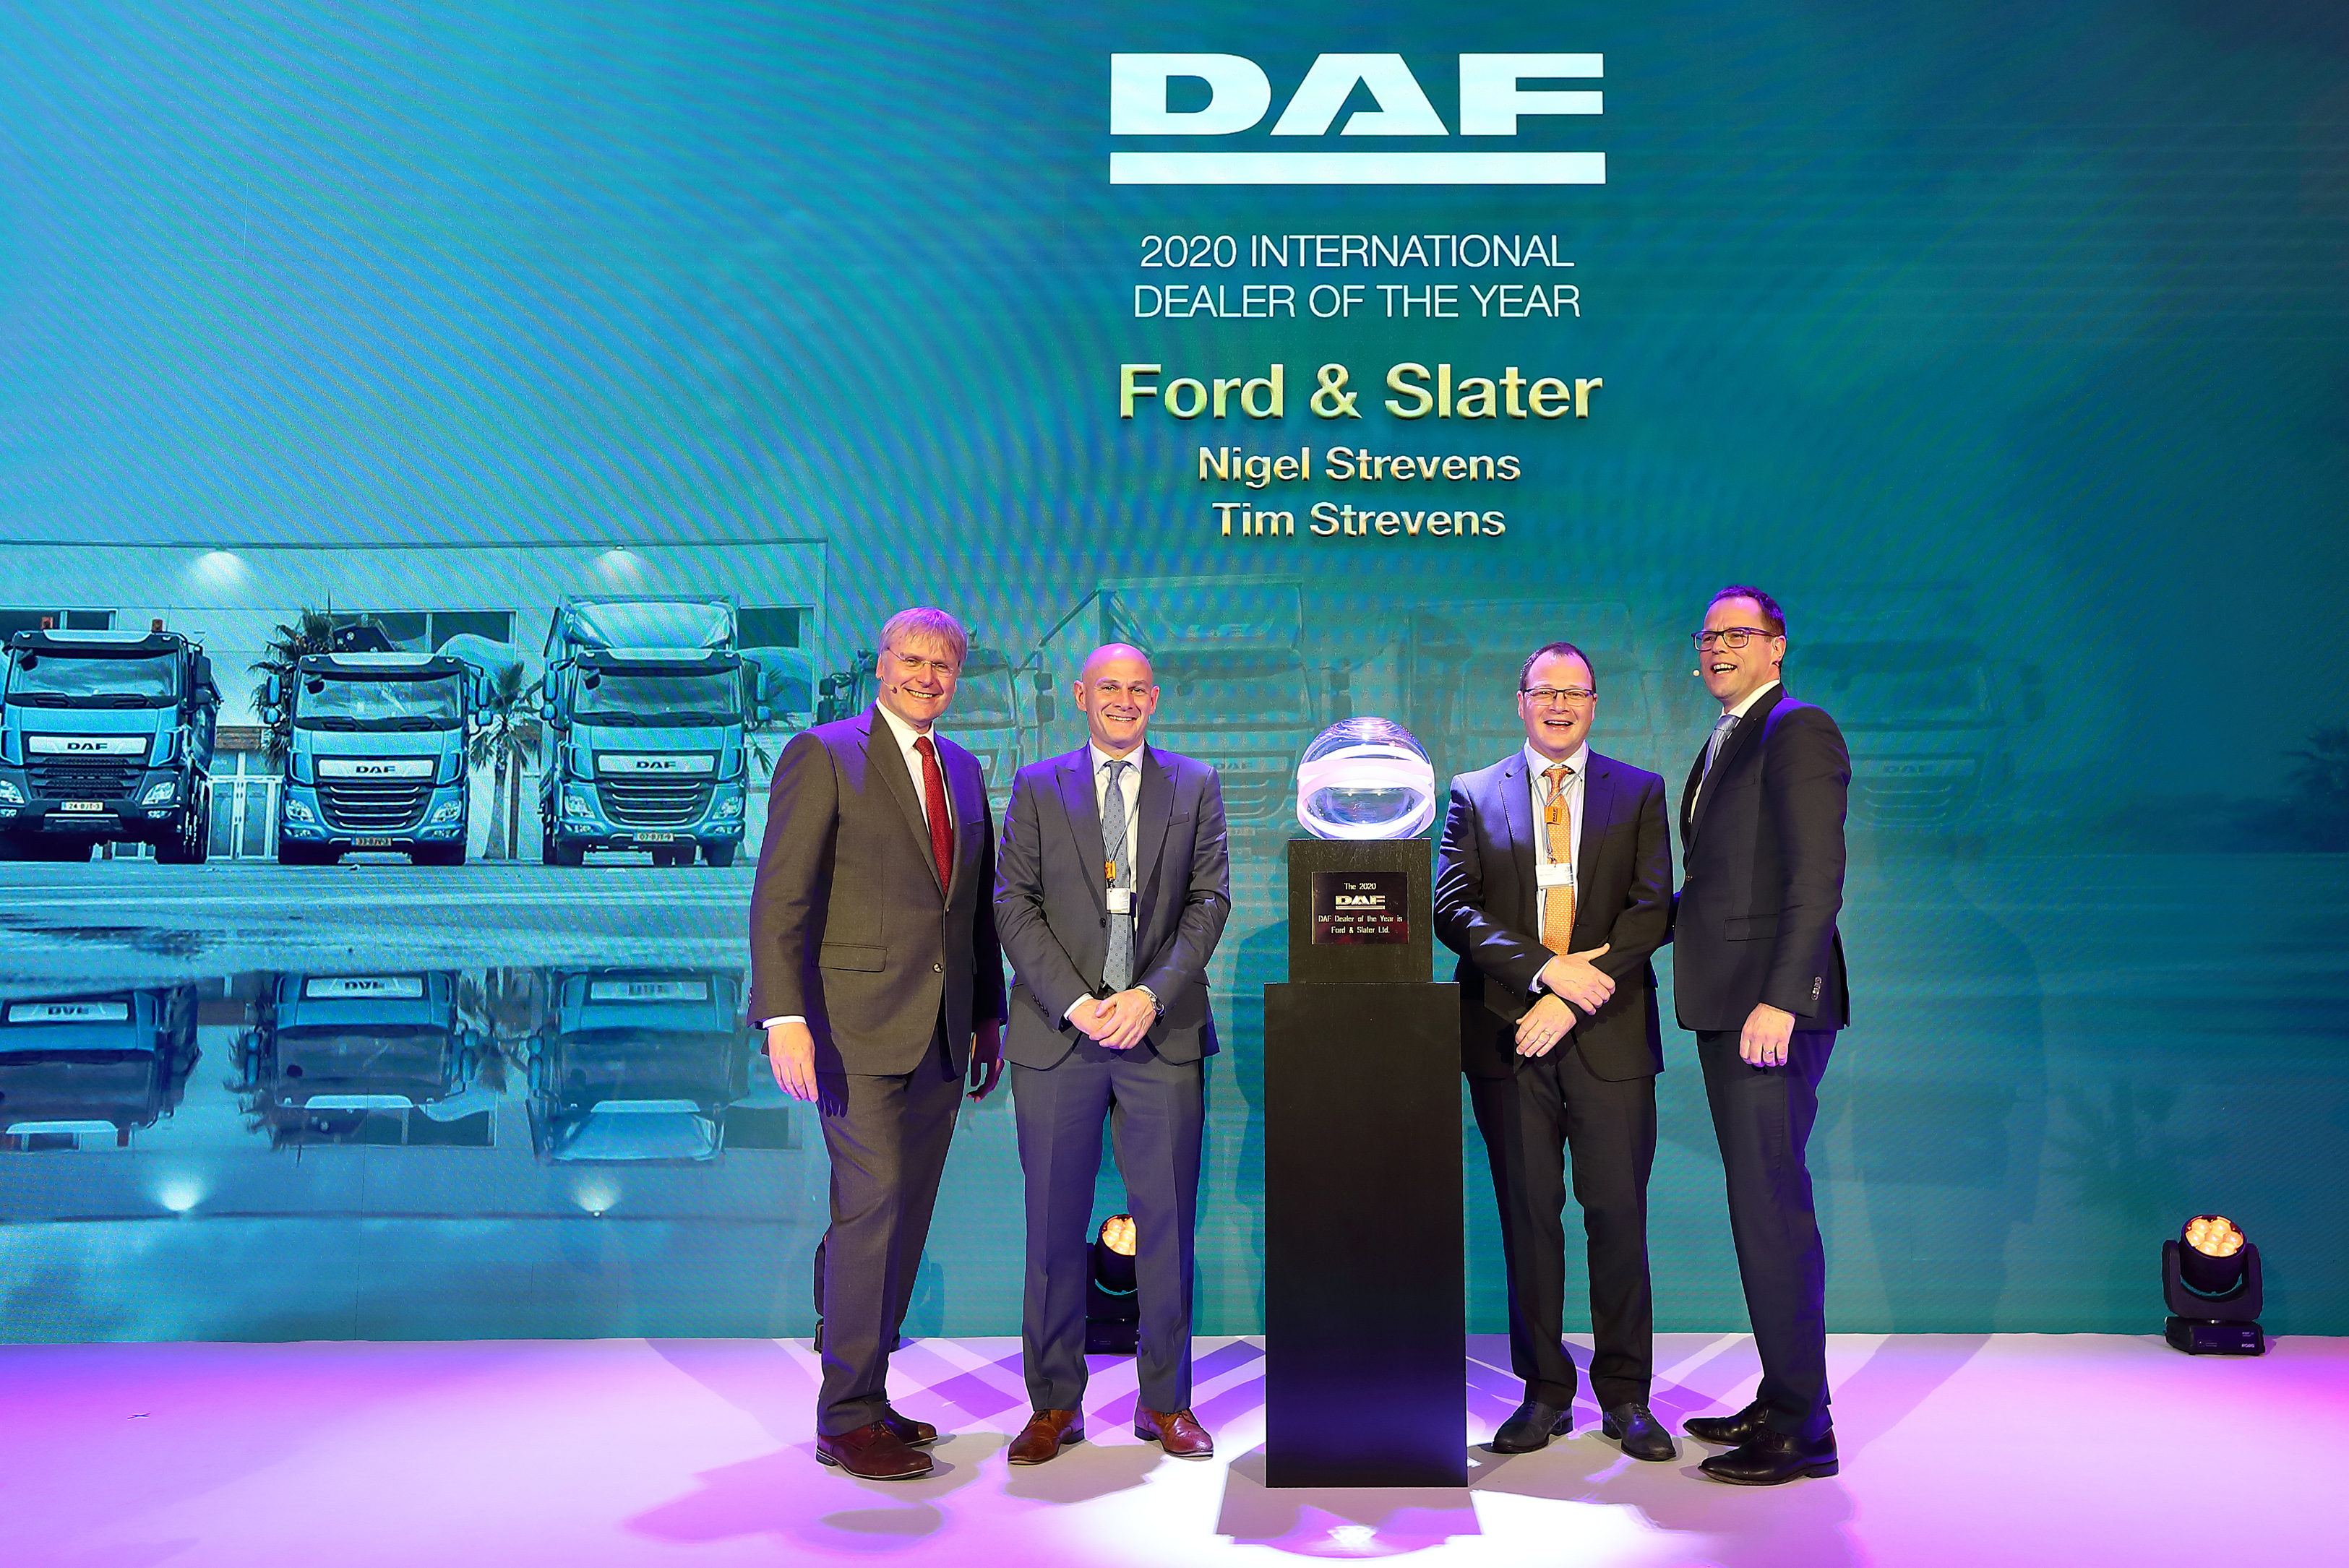 DAF Dealer of the Year Ford & Slater